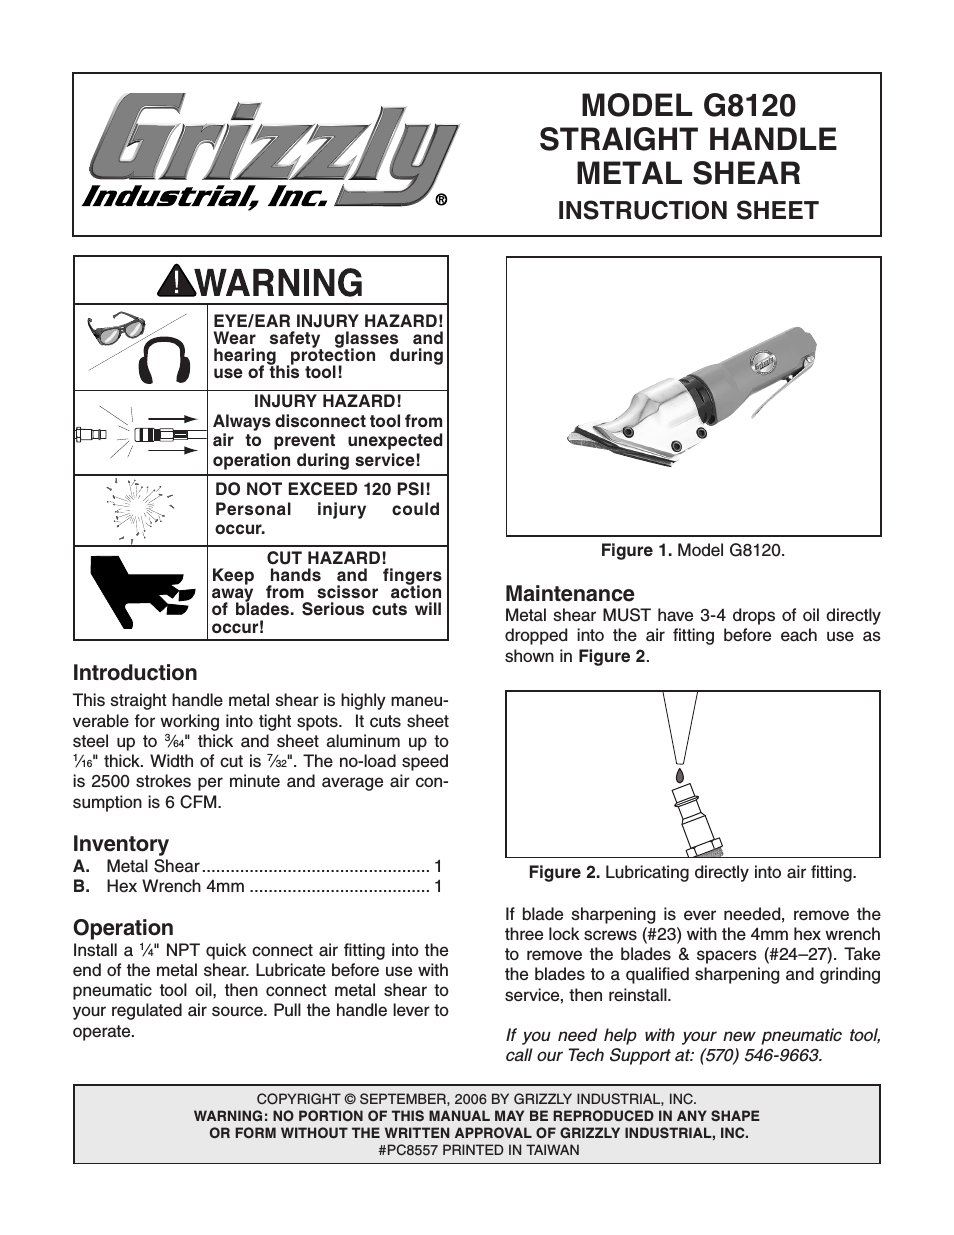 Industrial Inc.Straight Handle Metal Shear G8120